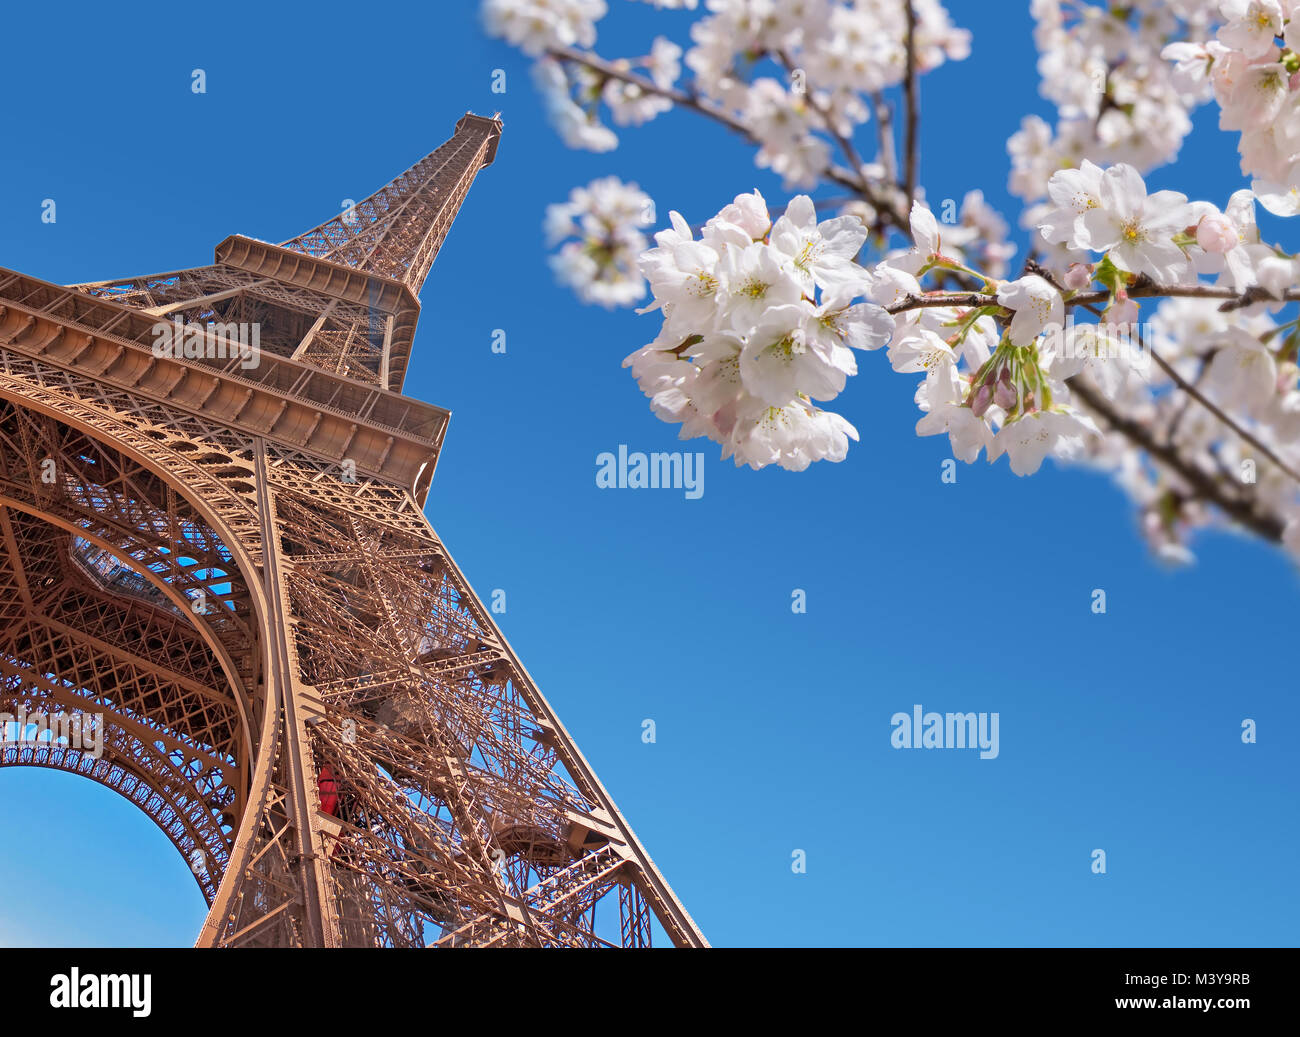 Eiffel tower and cherry blossom, Paris at springtime concept Stock Photo